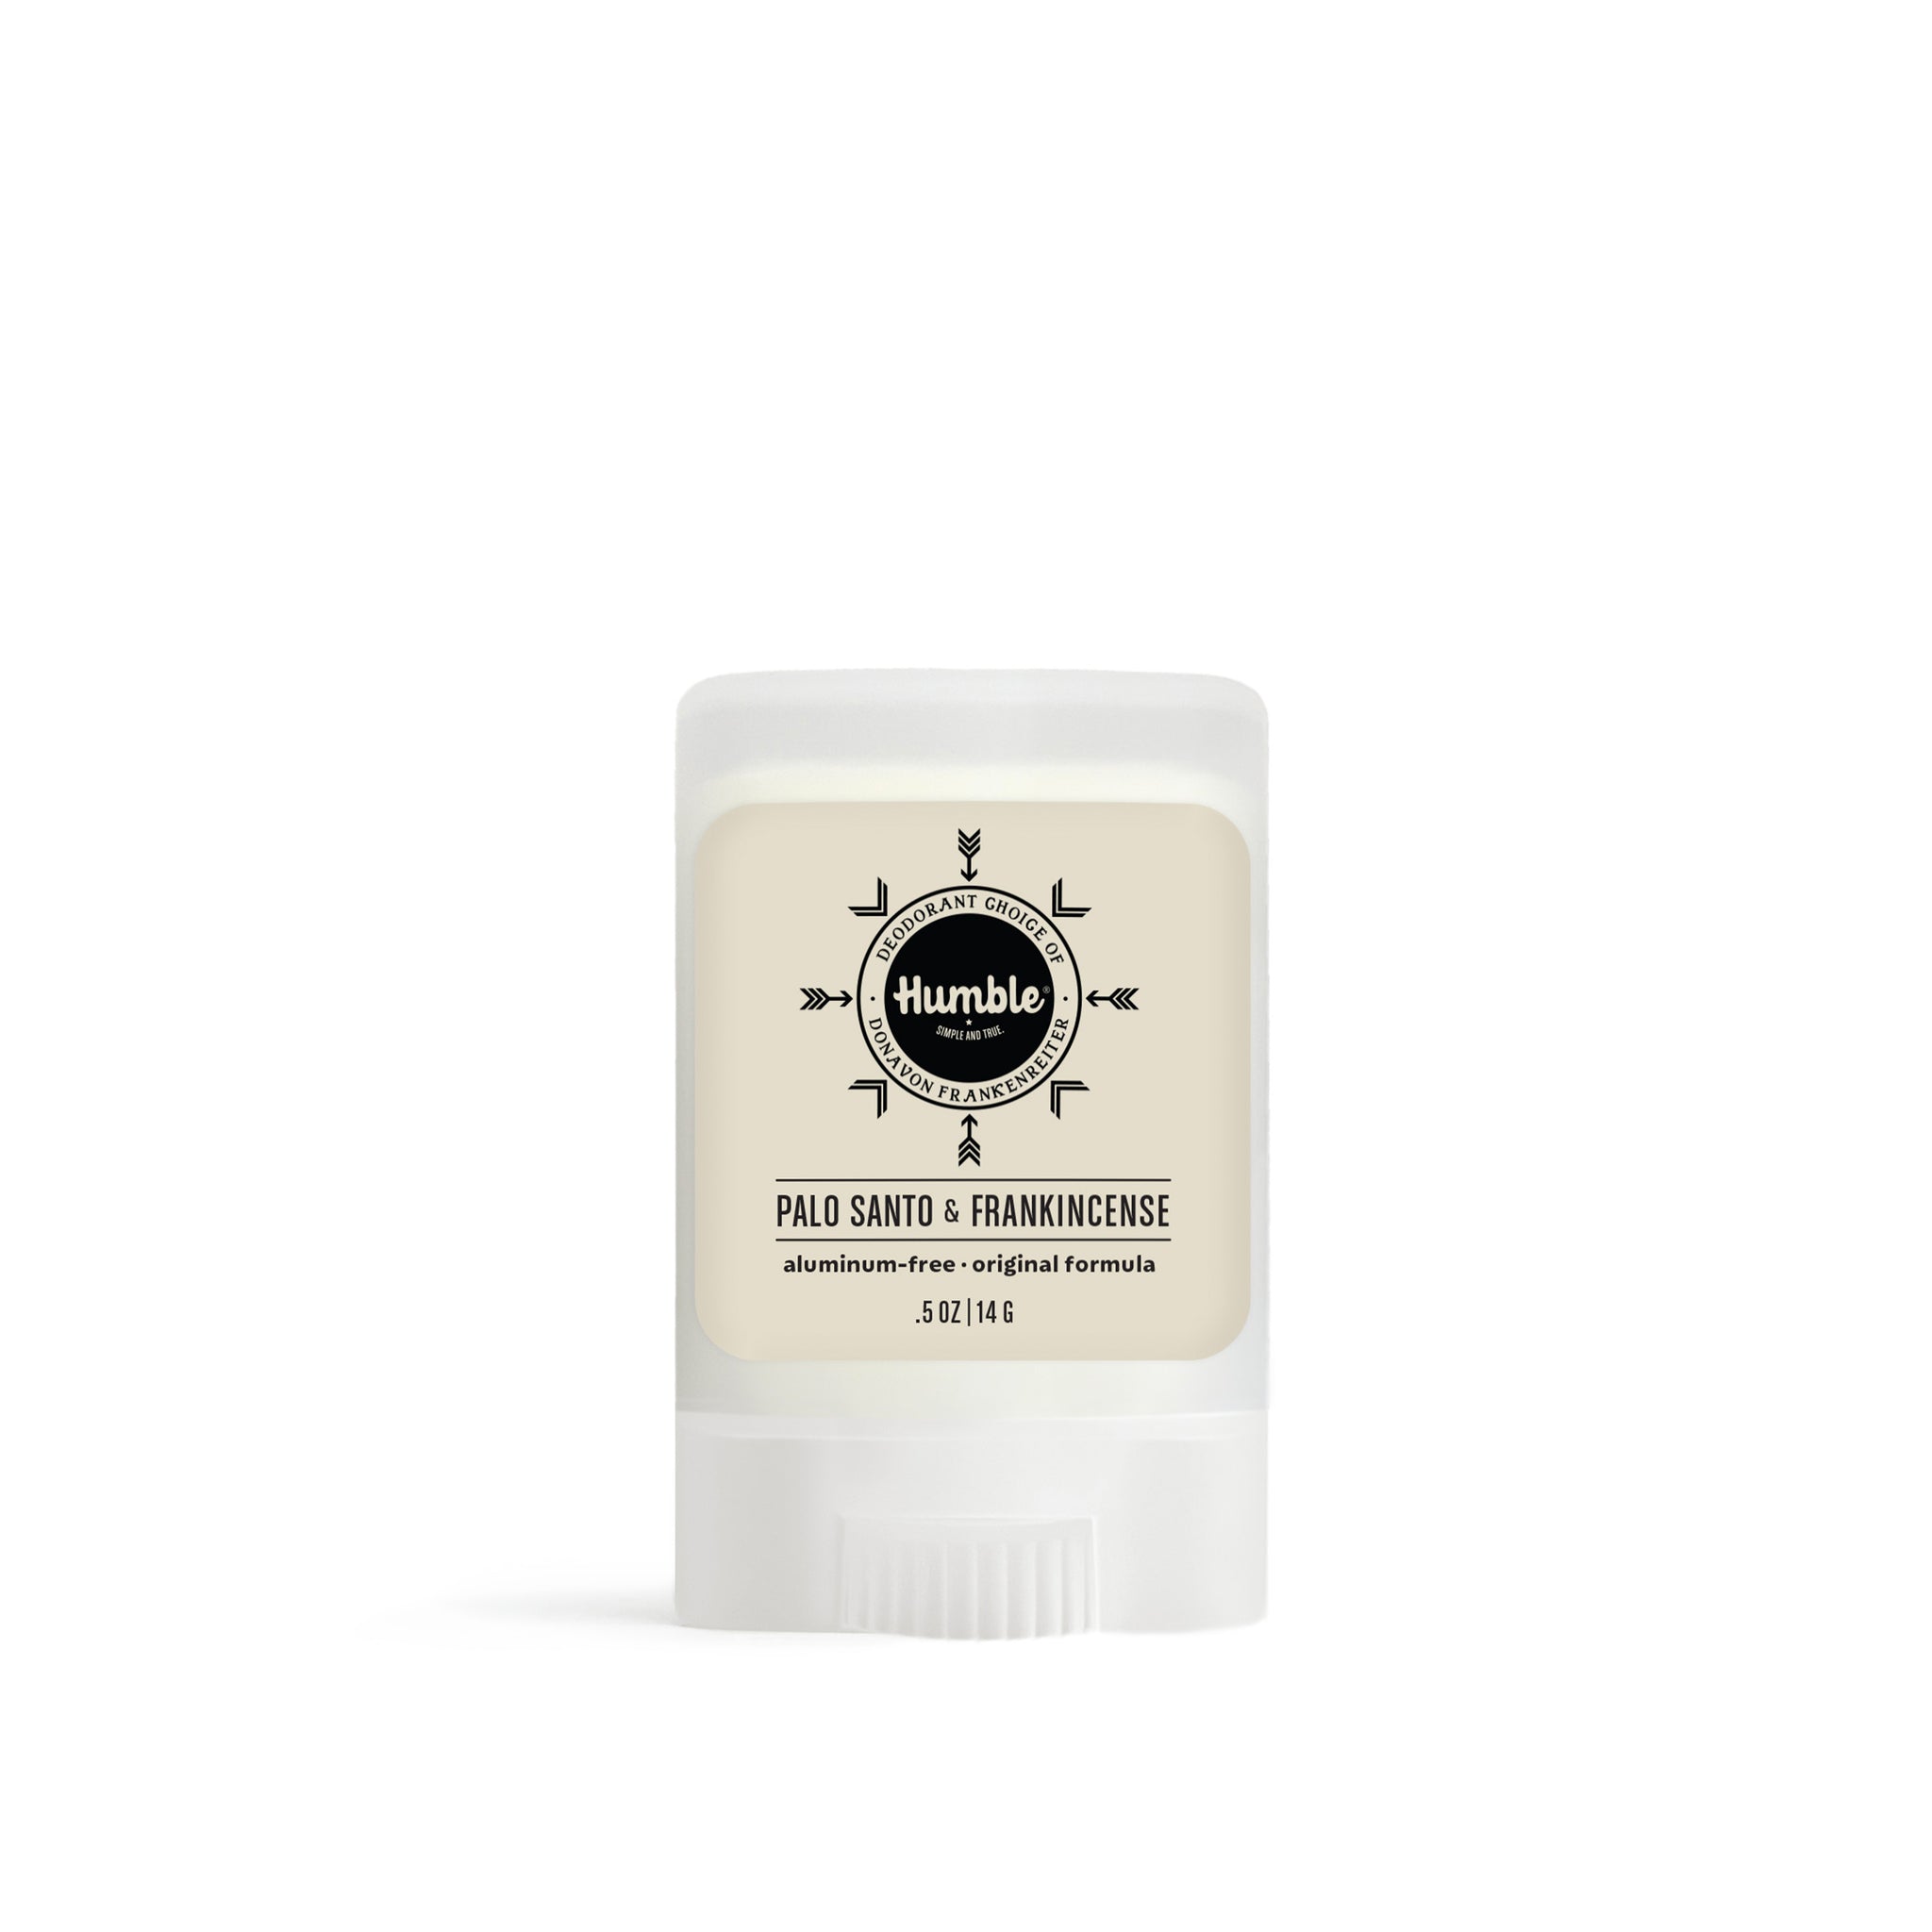 Palo Santo & Frankincense Natural Deodorant 14g